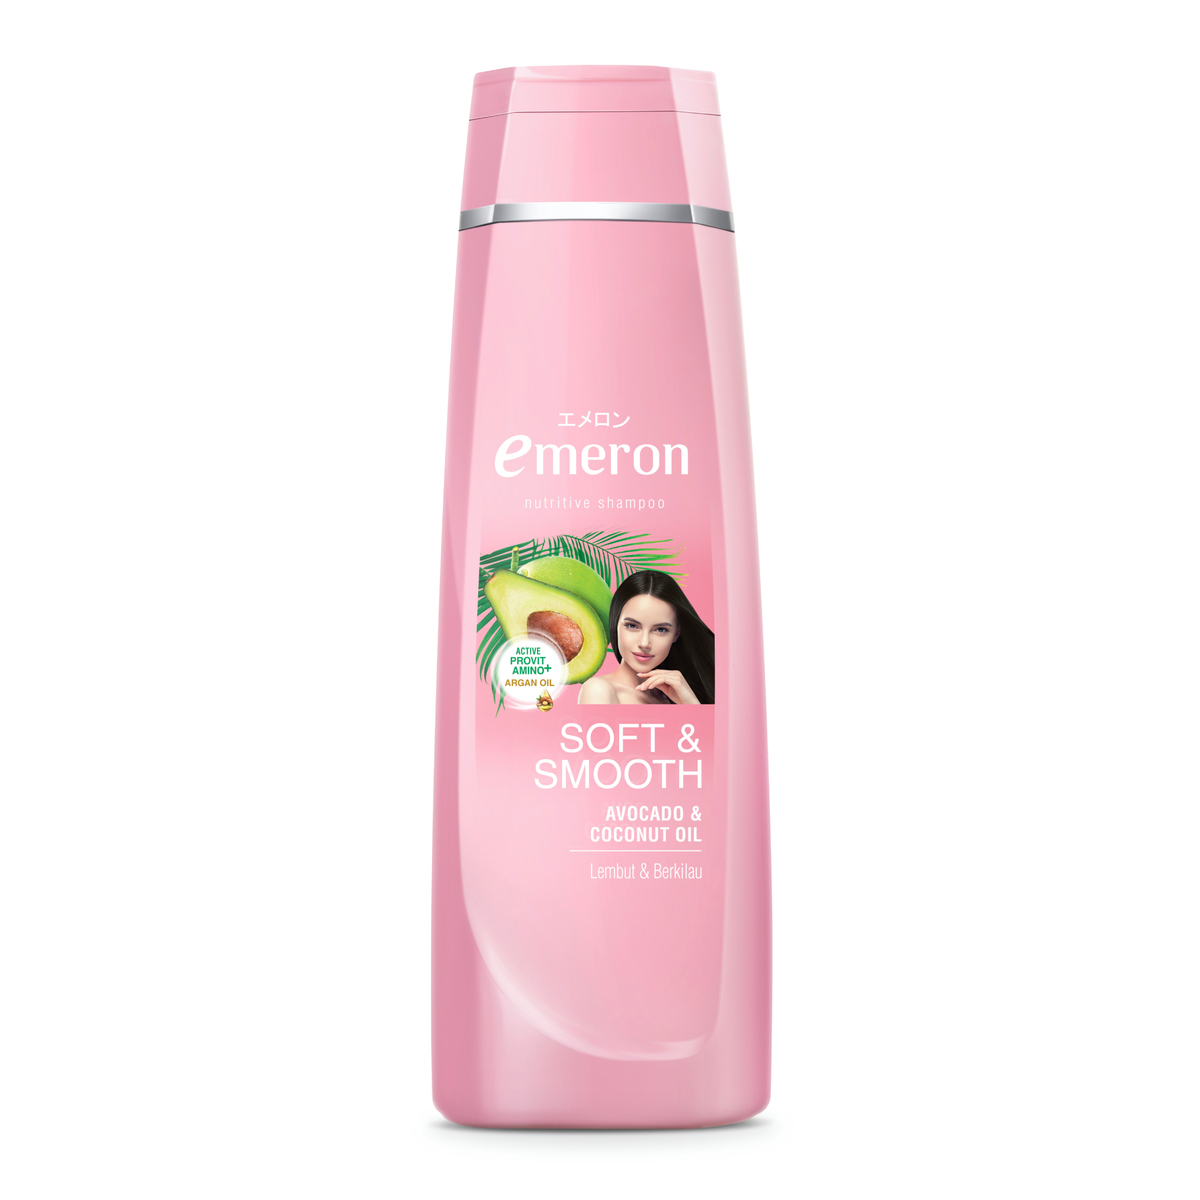 Emeron Shampo Hair Soft & Smooth Botol 340ml